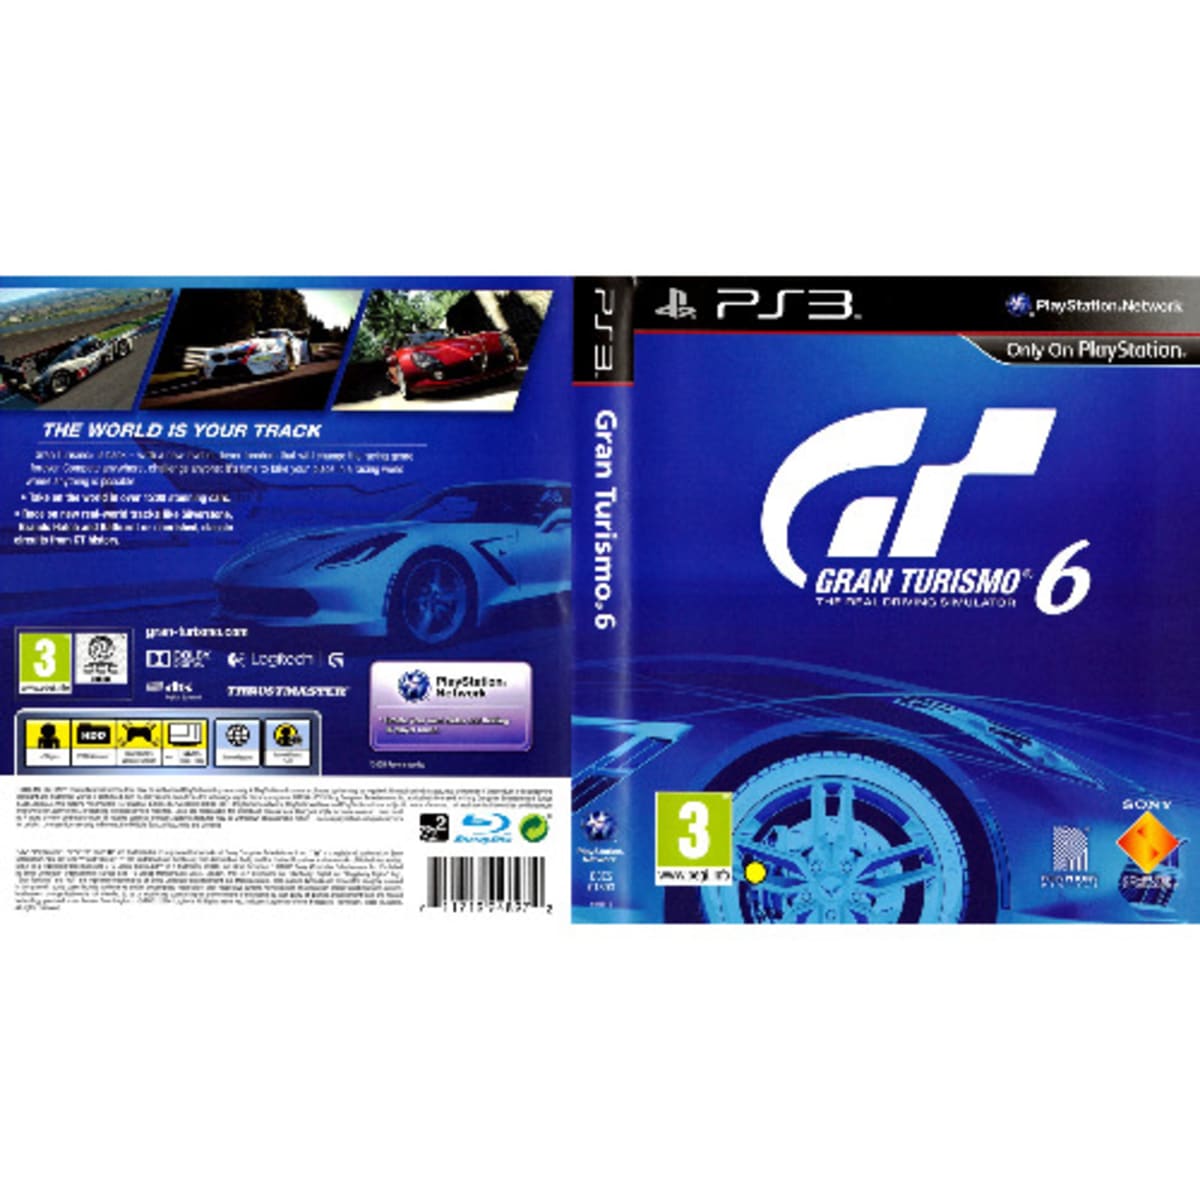 Sony Turismo Online Gran (ps3) Konga 6 | Shopping